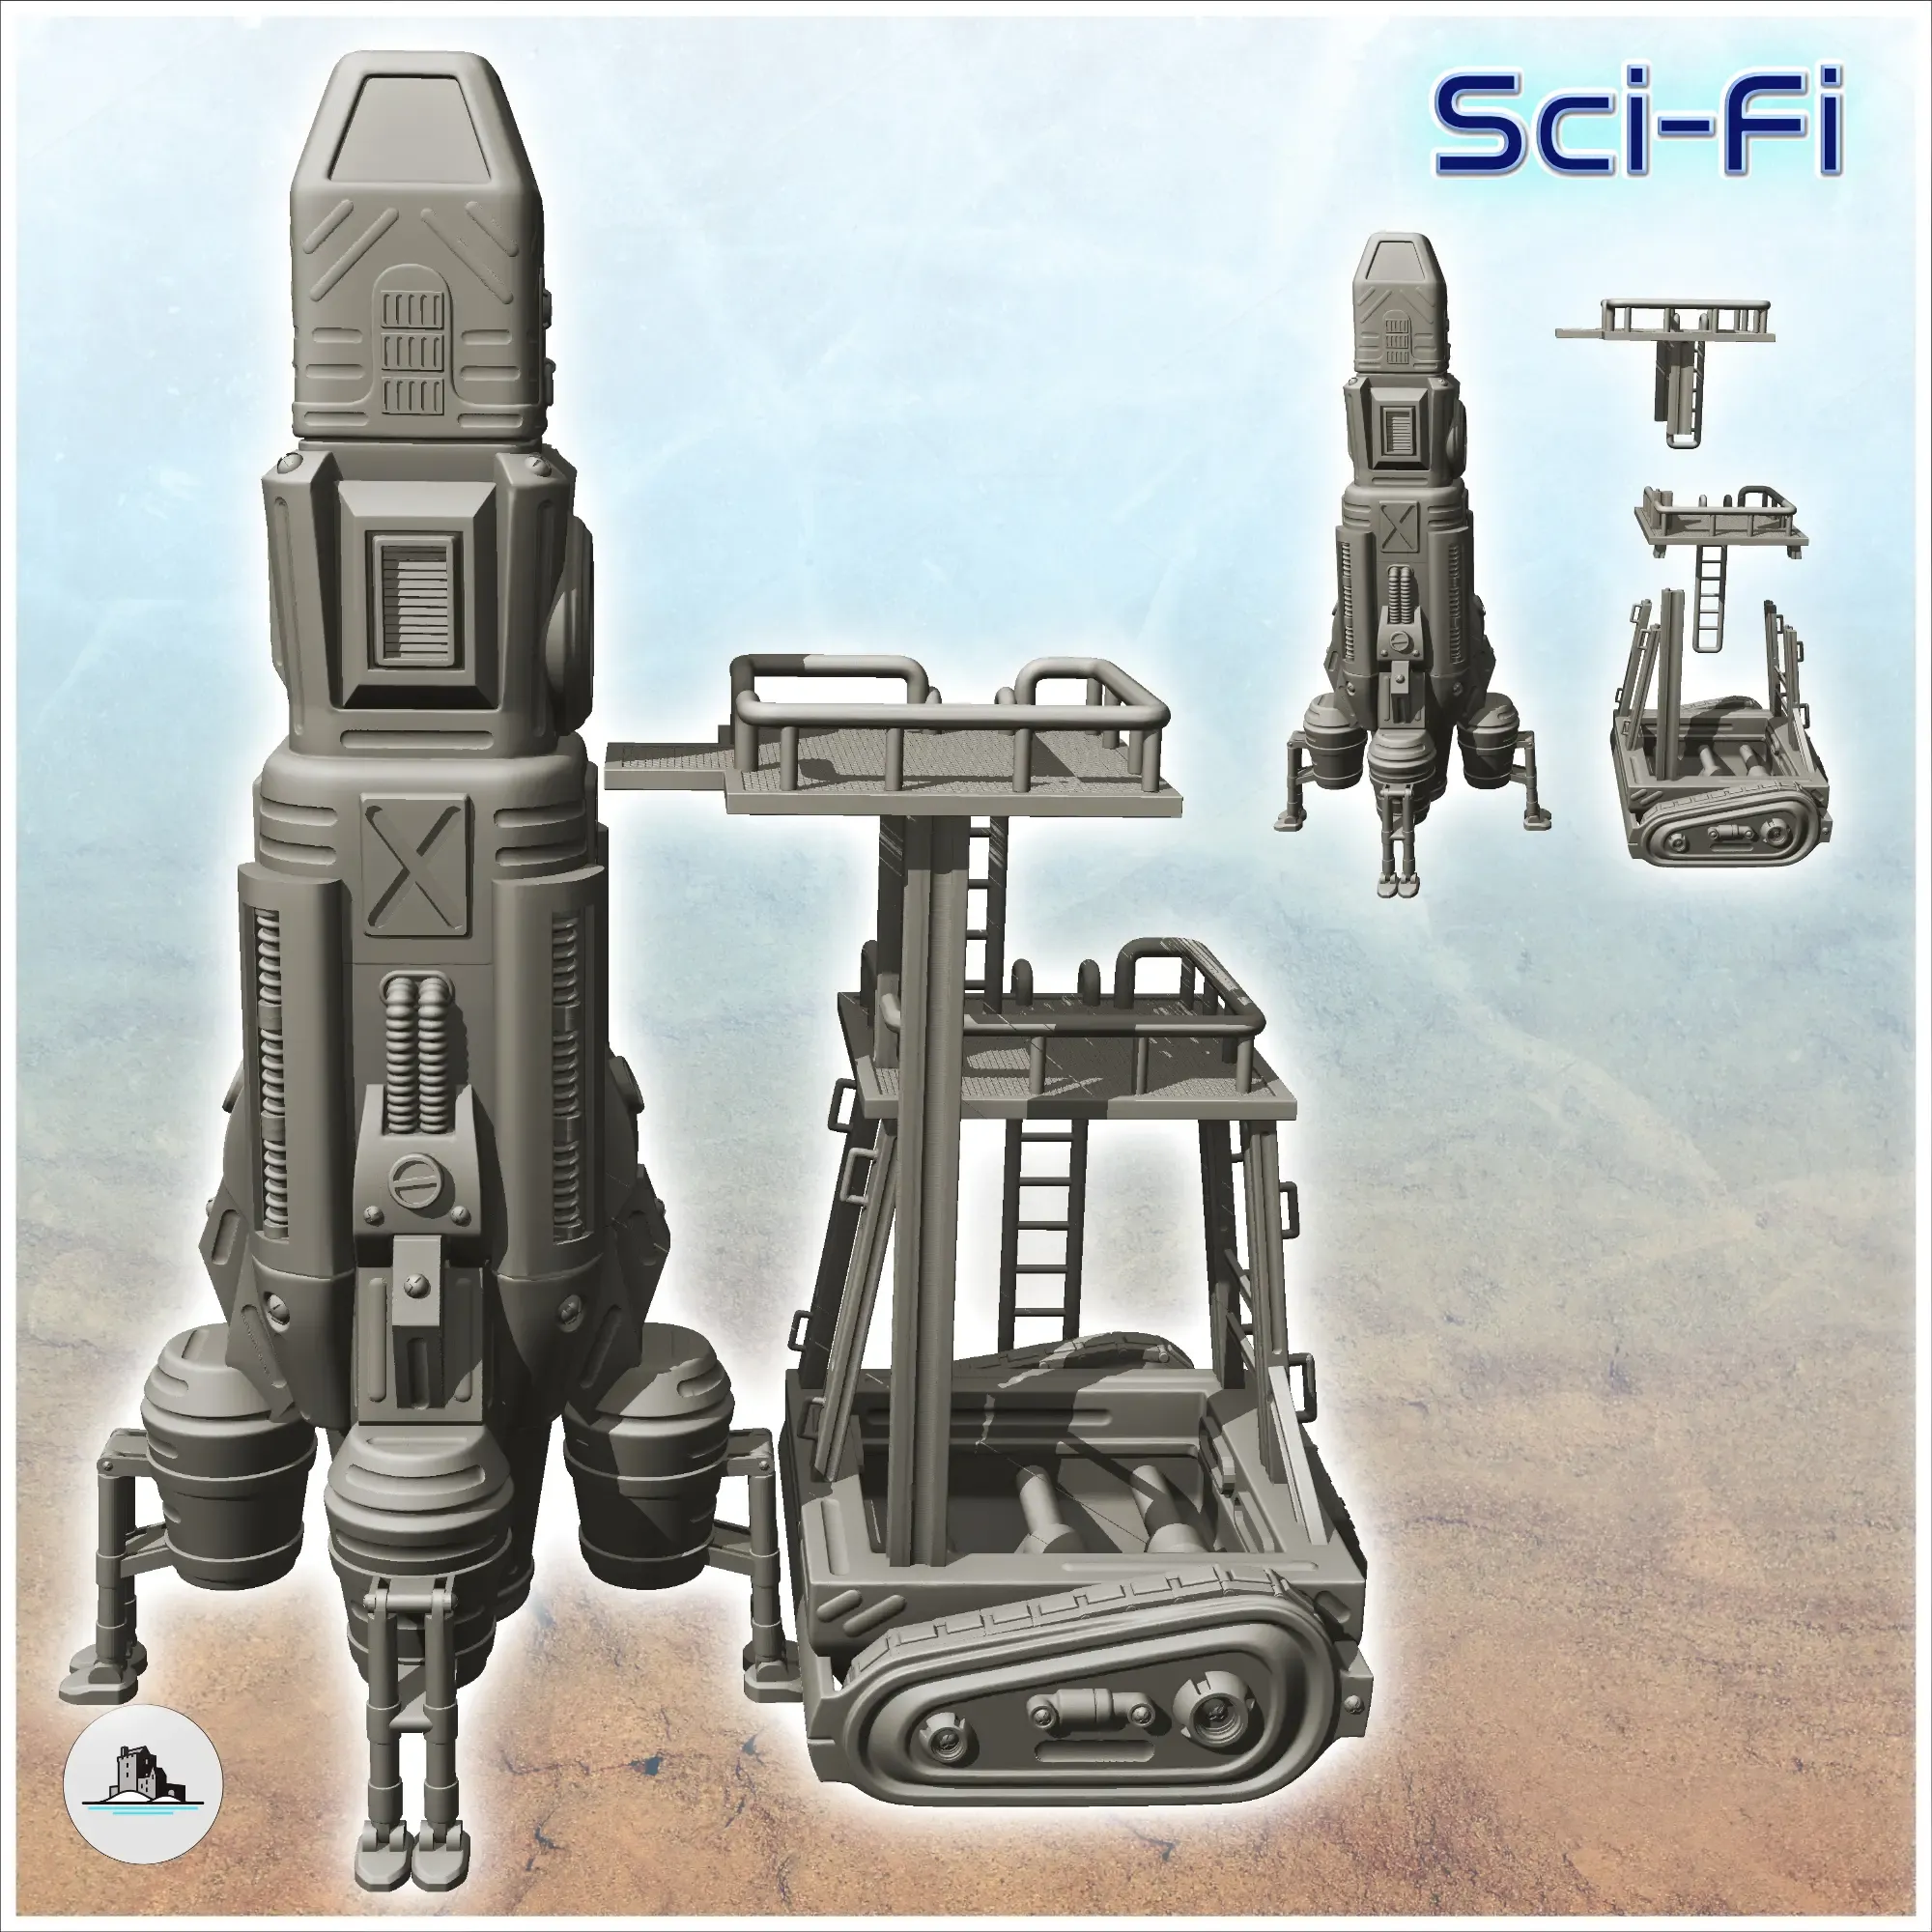 Quadri-reactor rocket - Terrain Scifi Science fiction SF